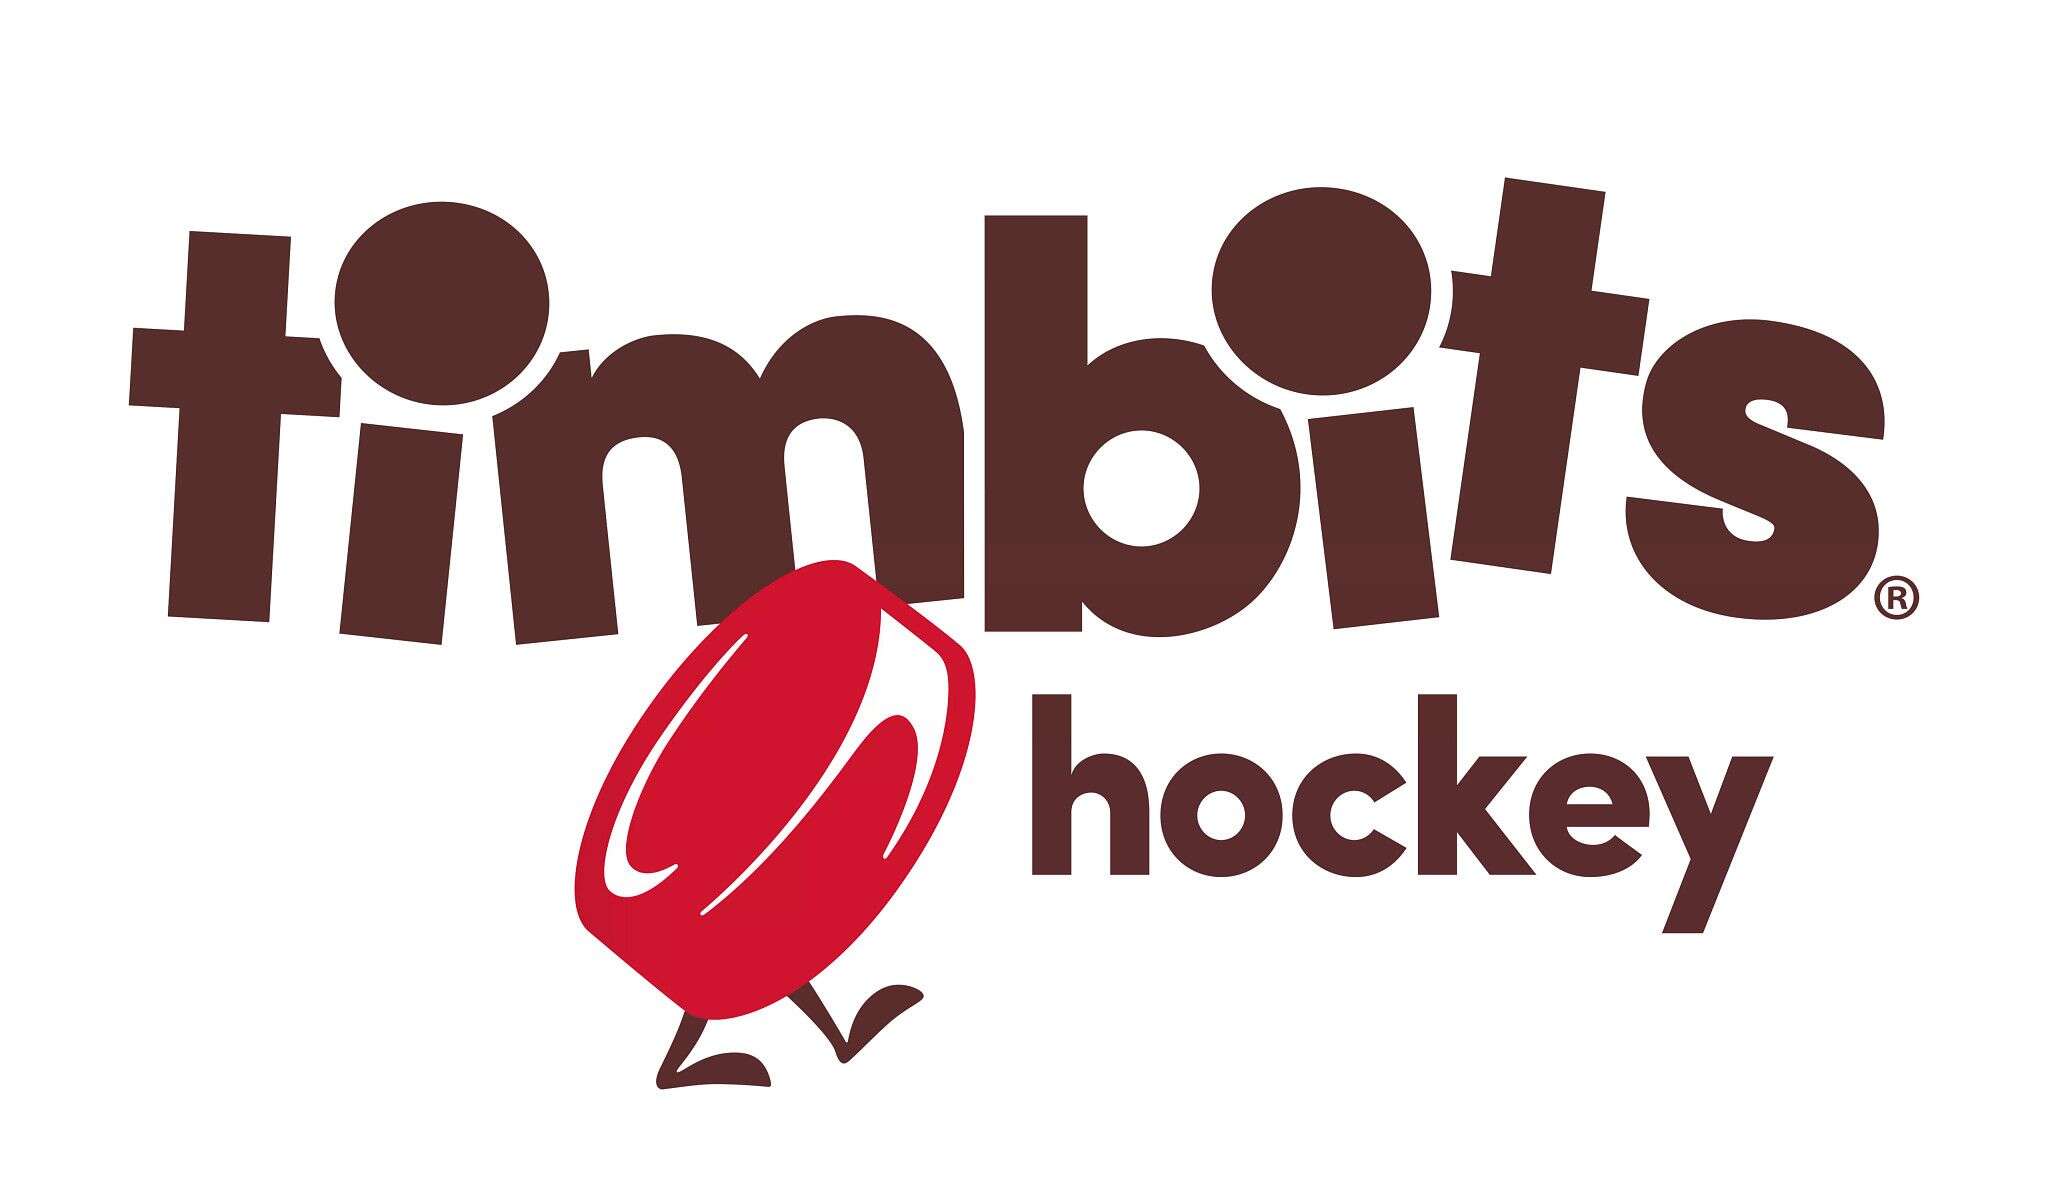 Tim Hortons Timbits Hockey Program-THE FIRST GOAL IS HAVING FUN.: 